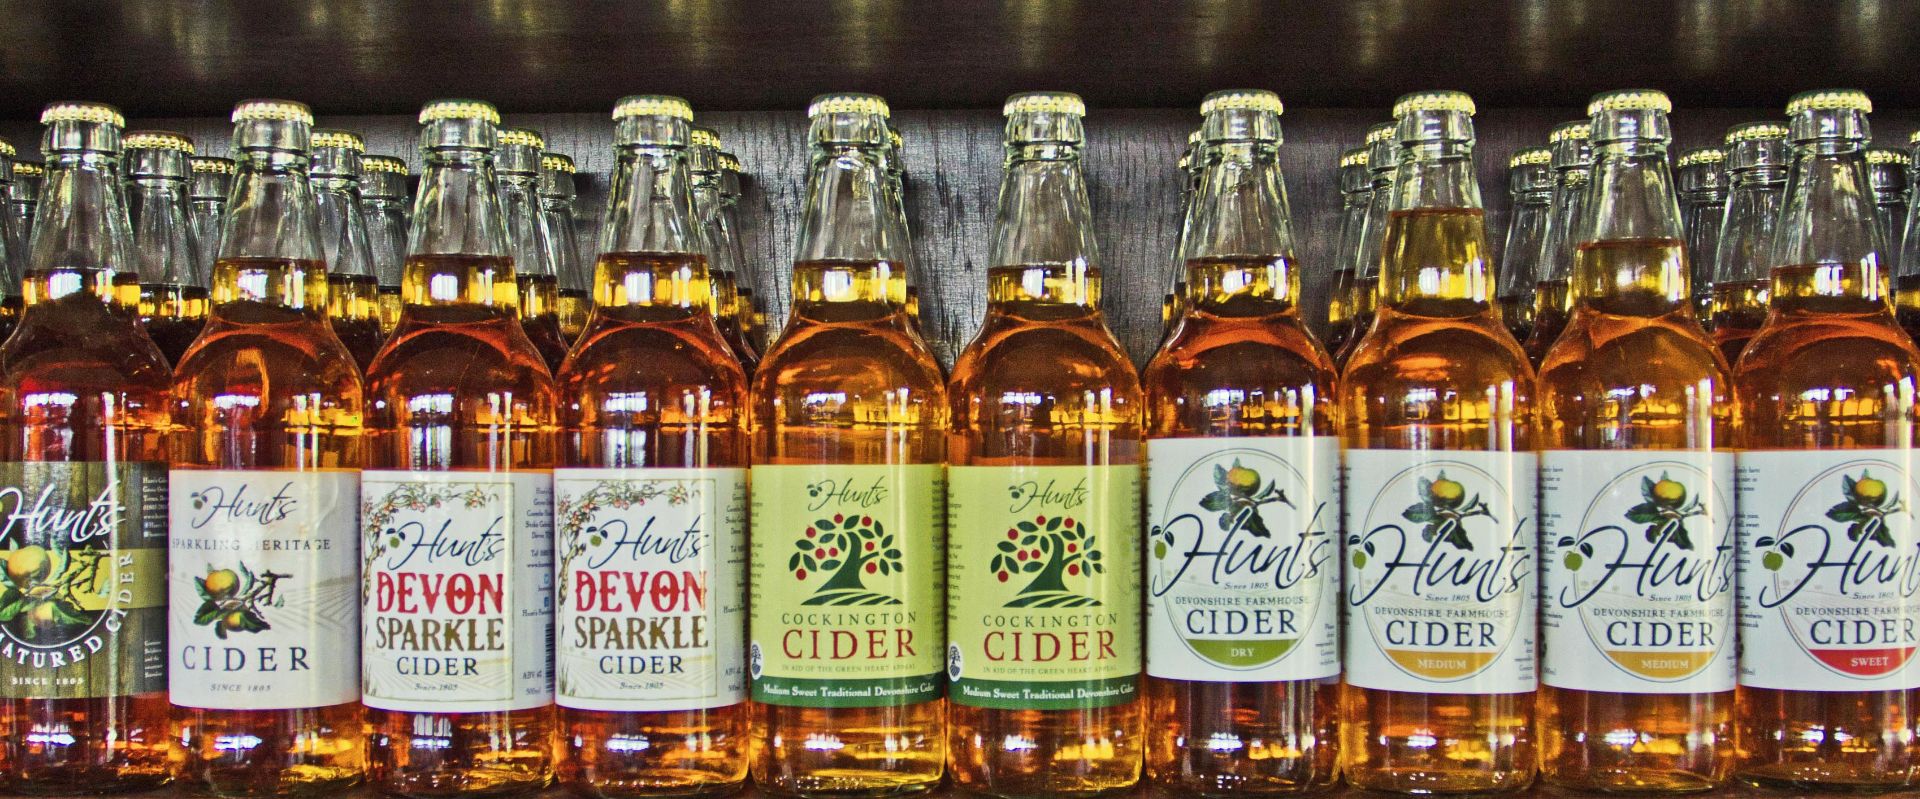 Hunt's Devon cider